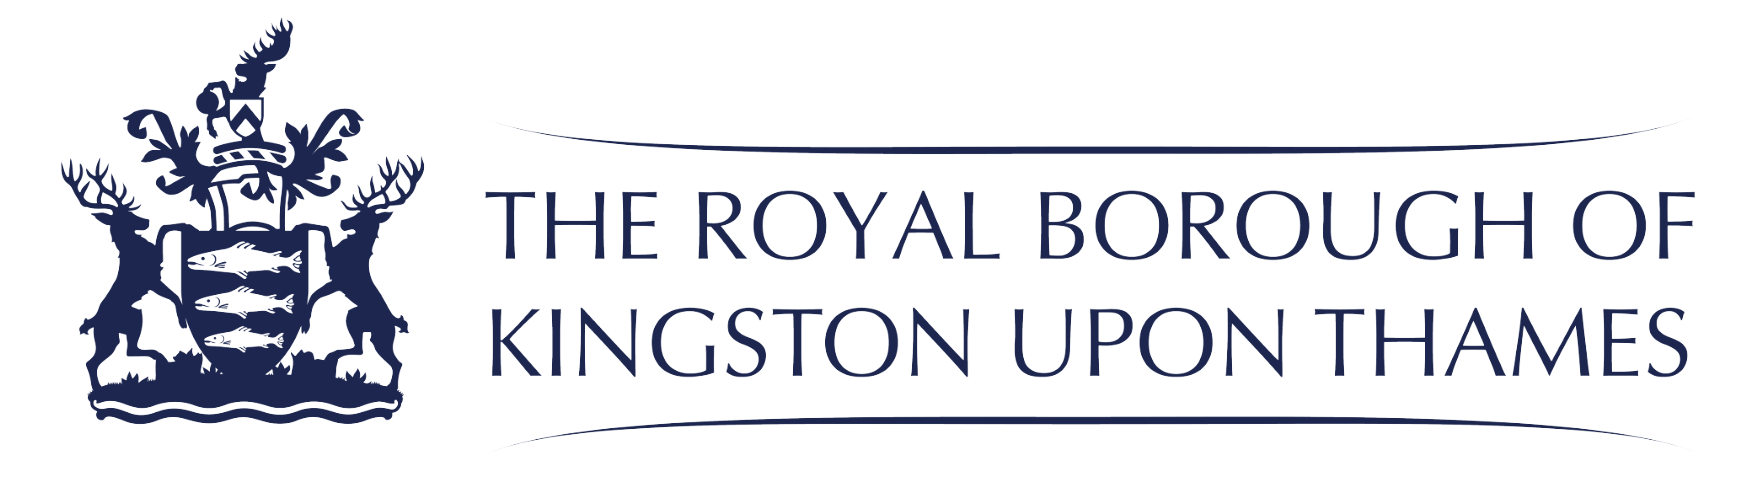 Kingston upon Thames council logo